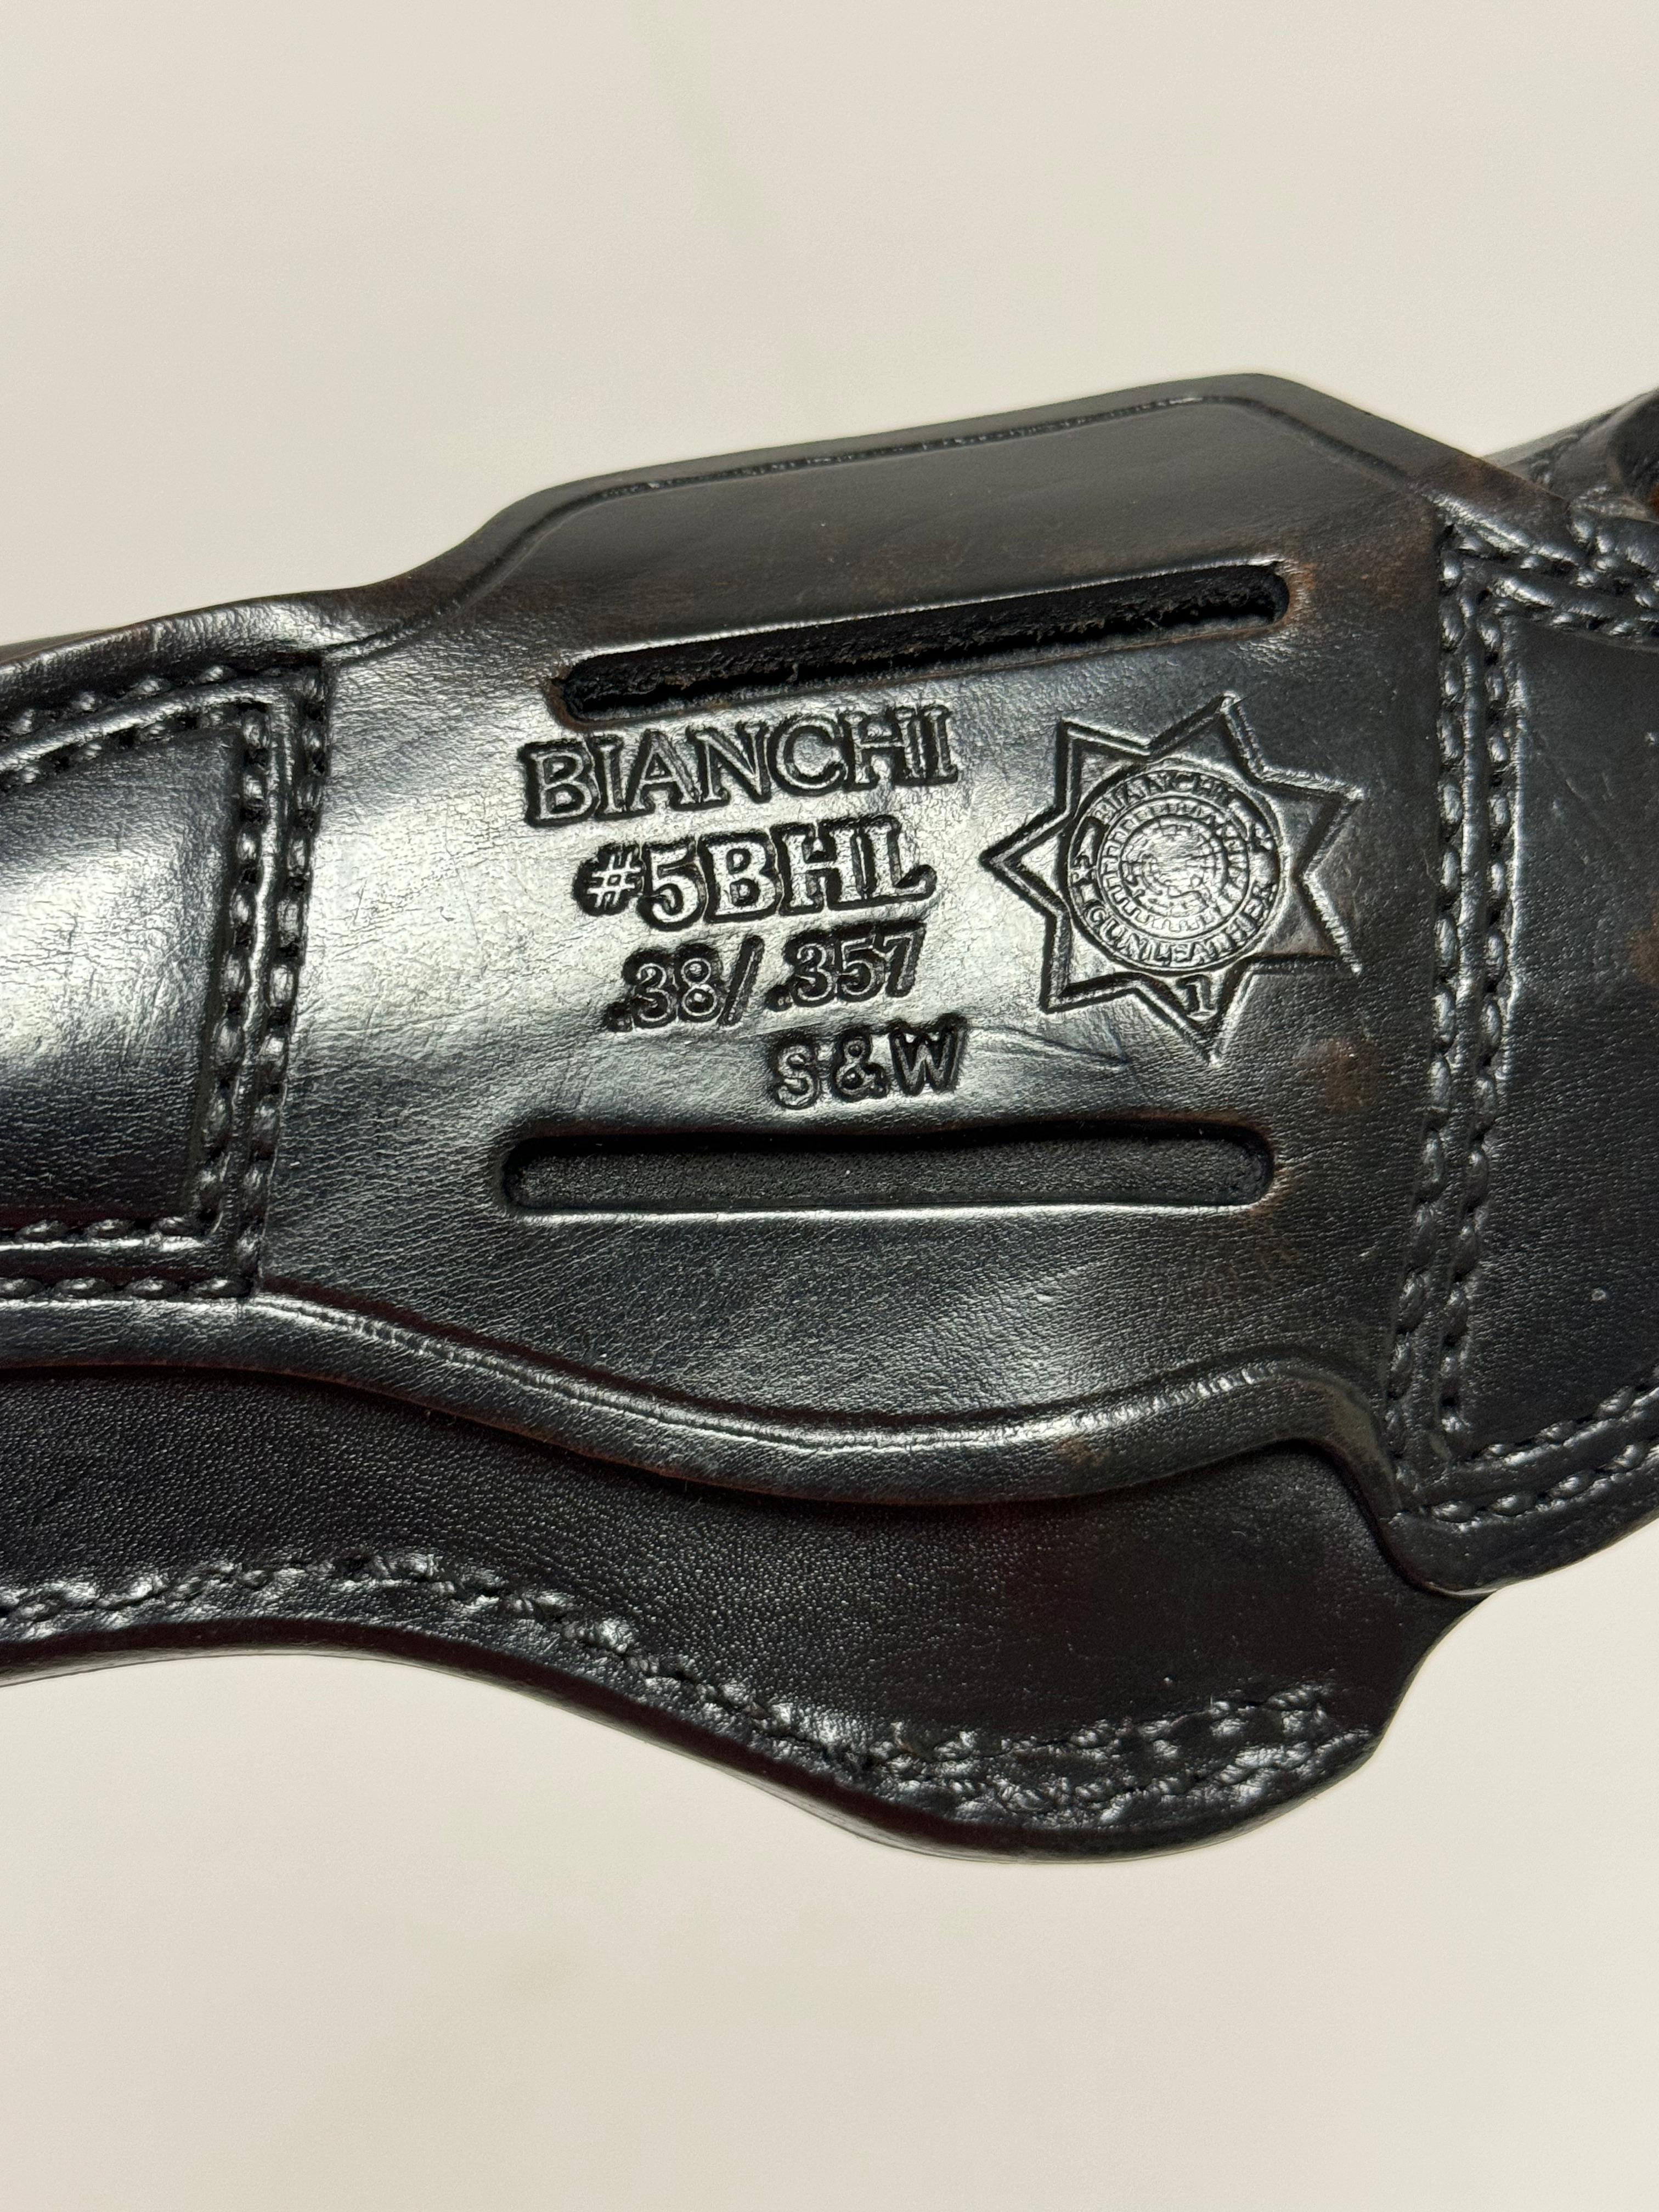 Bianchi #5BHL .38/.357 Smith & Wesson Black Leather Basket Weave Police Holster 